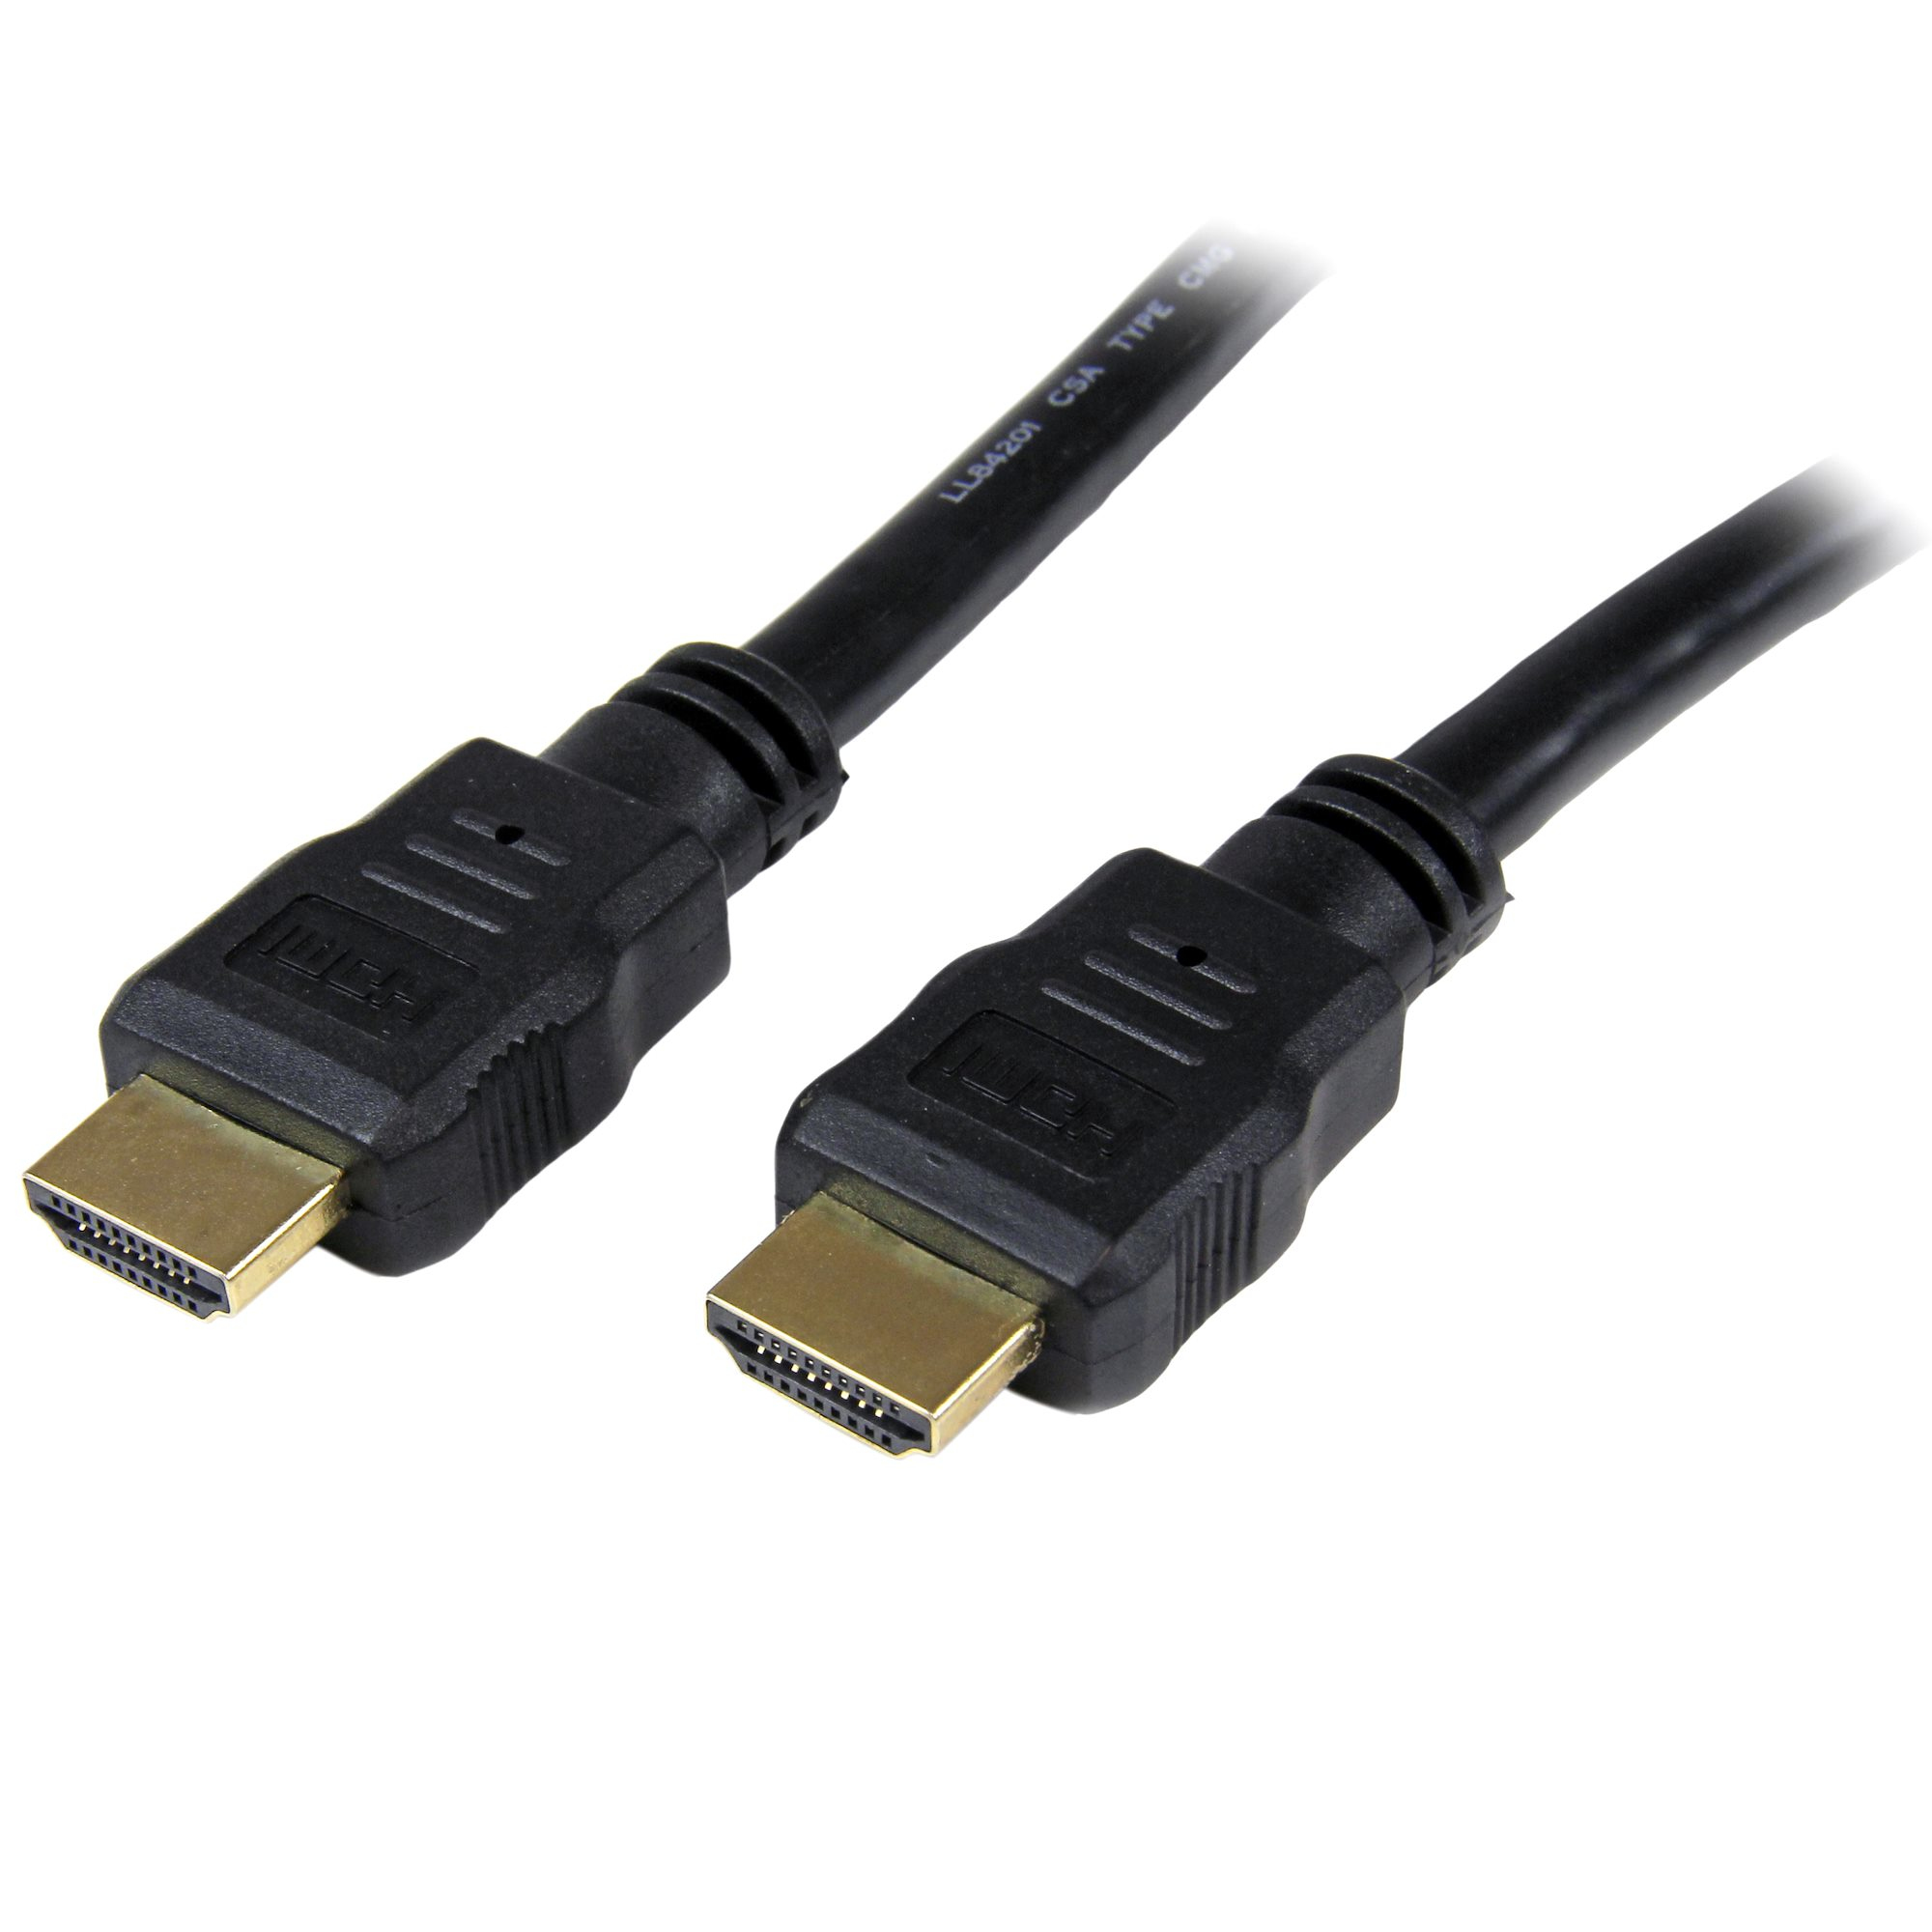 StarTech.com High-Speed-HDMI-Kabel 5m - HDMI Verbindungskabel Ultra HD 4k x 2k mit vergoldeten Kontakten - HDMI Anschlusskabel (St/St)